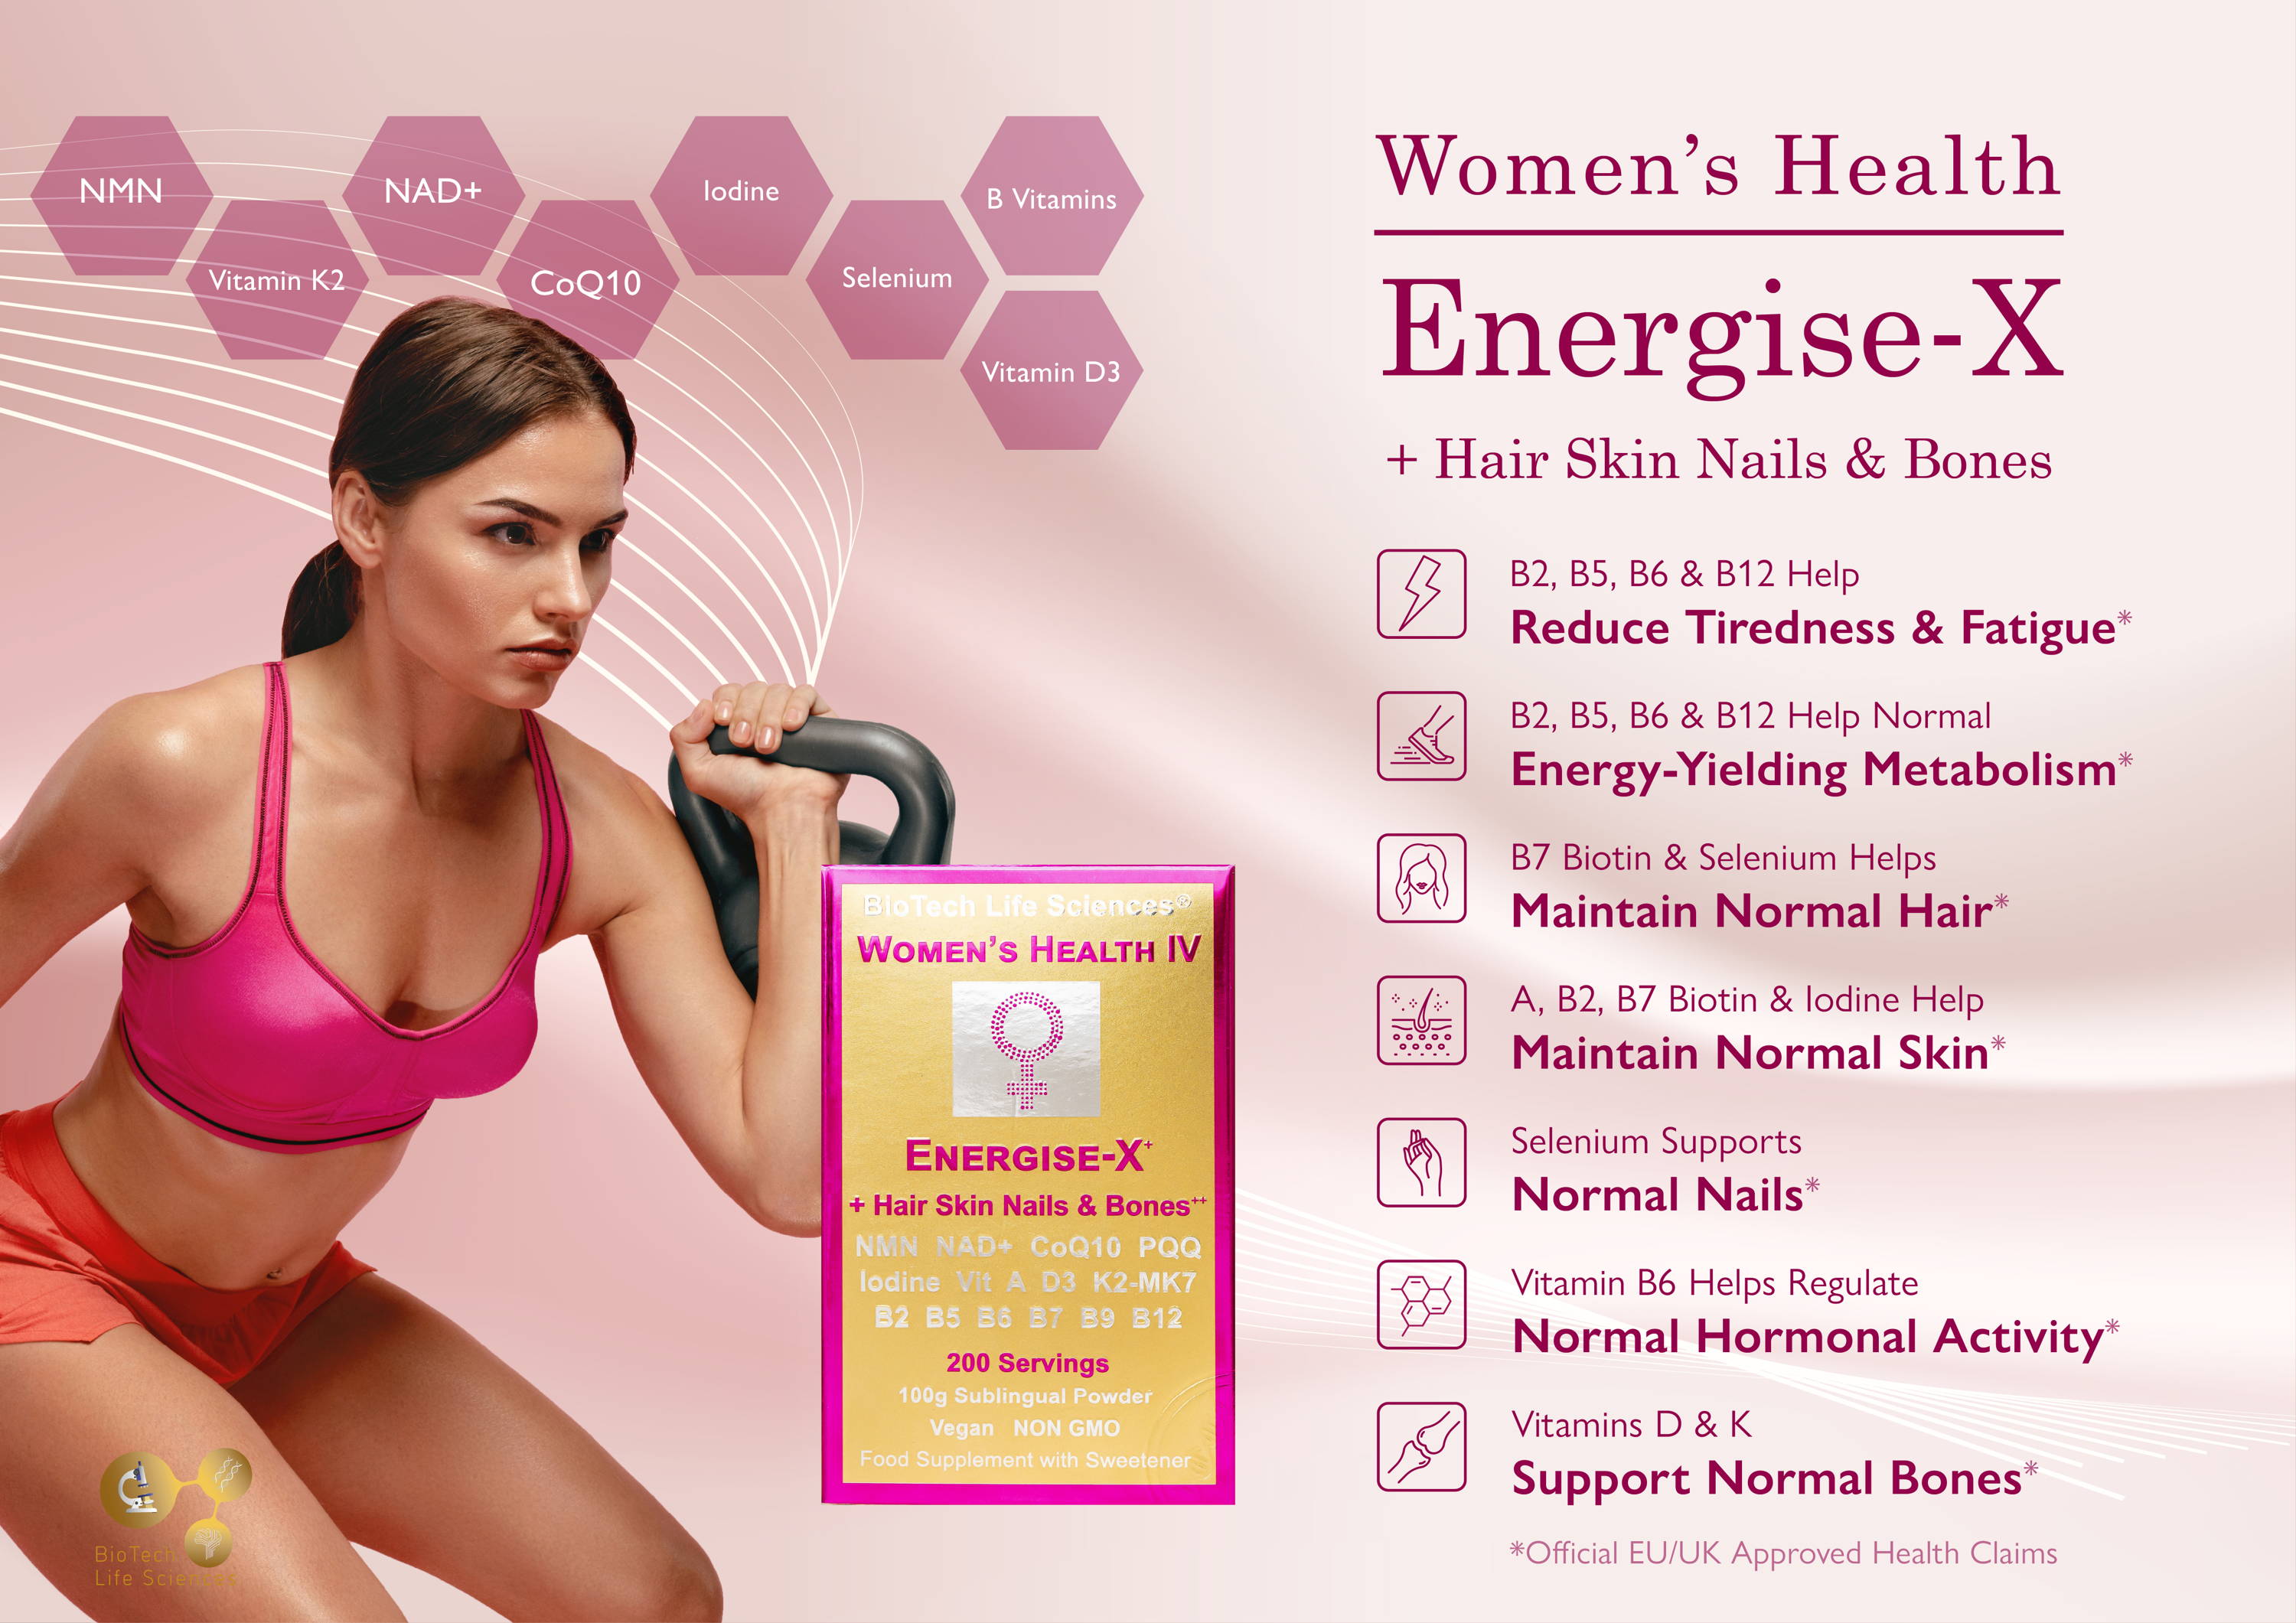 Women's Health Energise-X Benefits